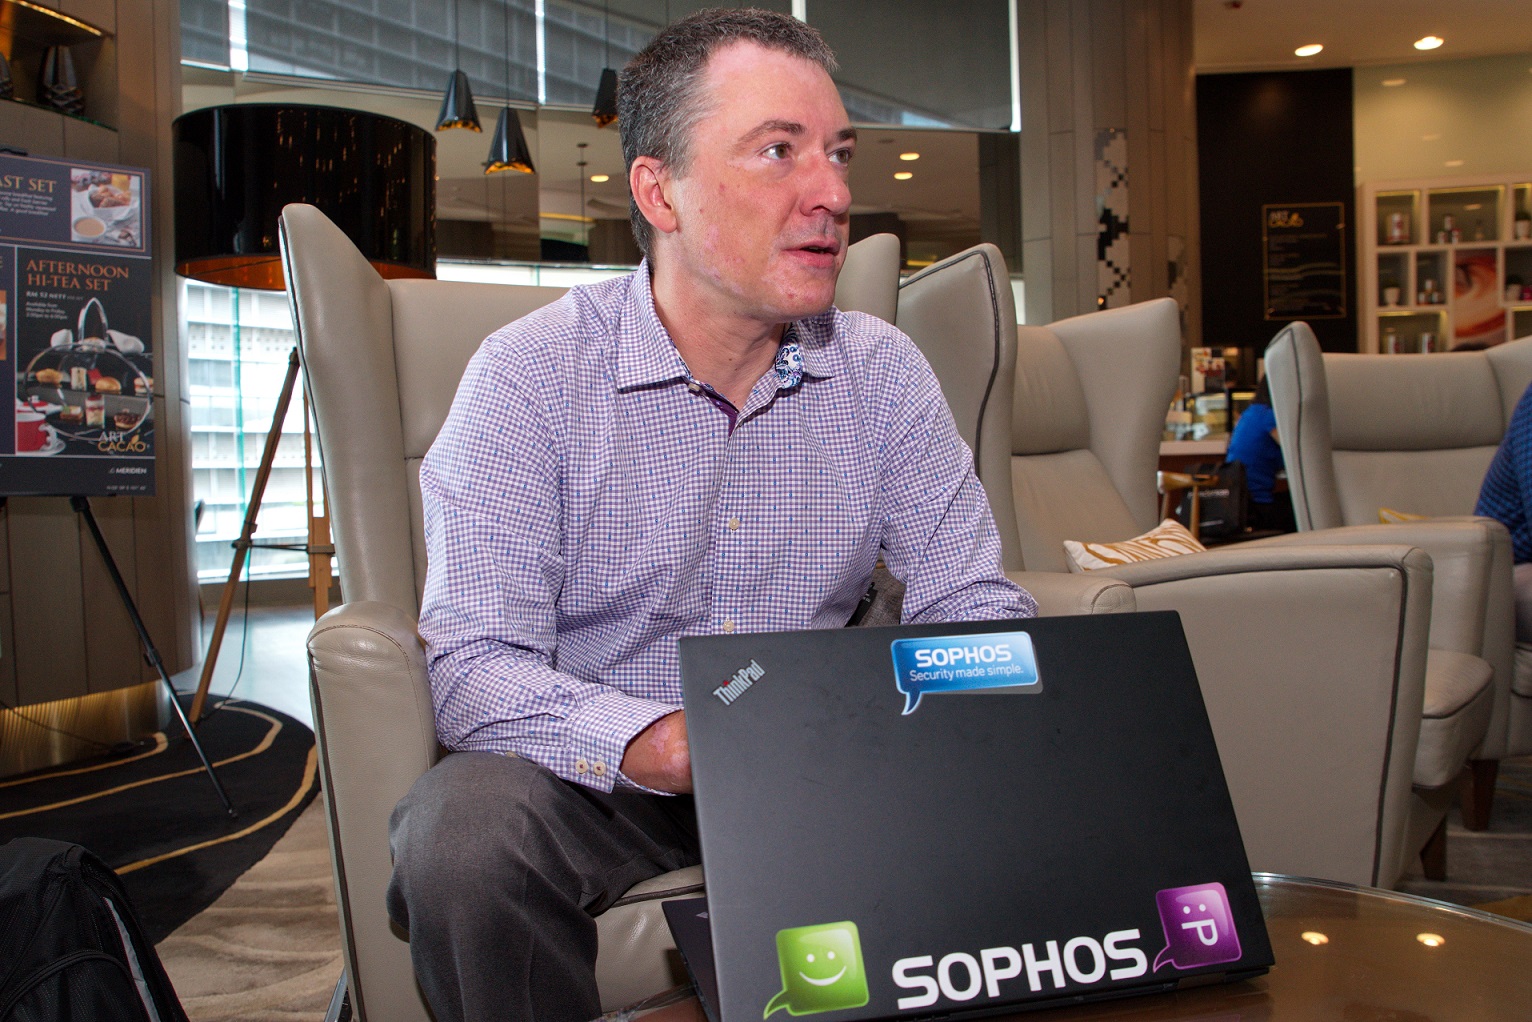 Sophos advises companies to tread carefully with IoT